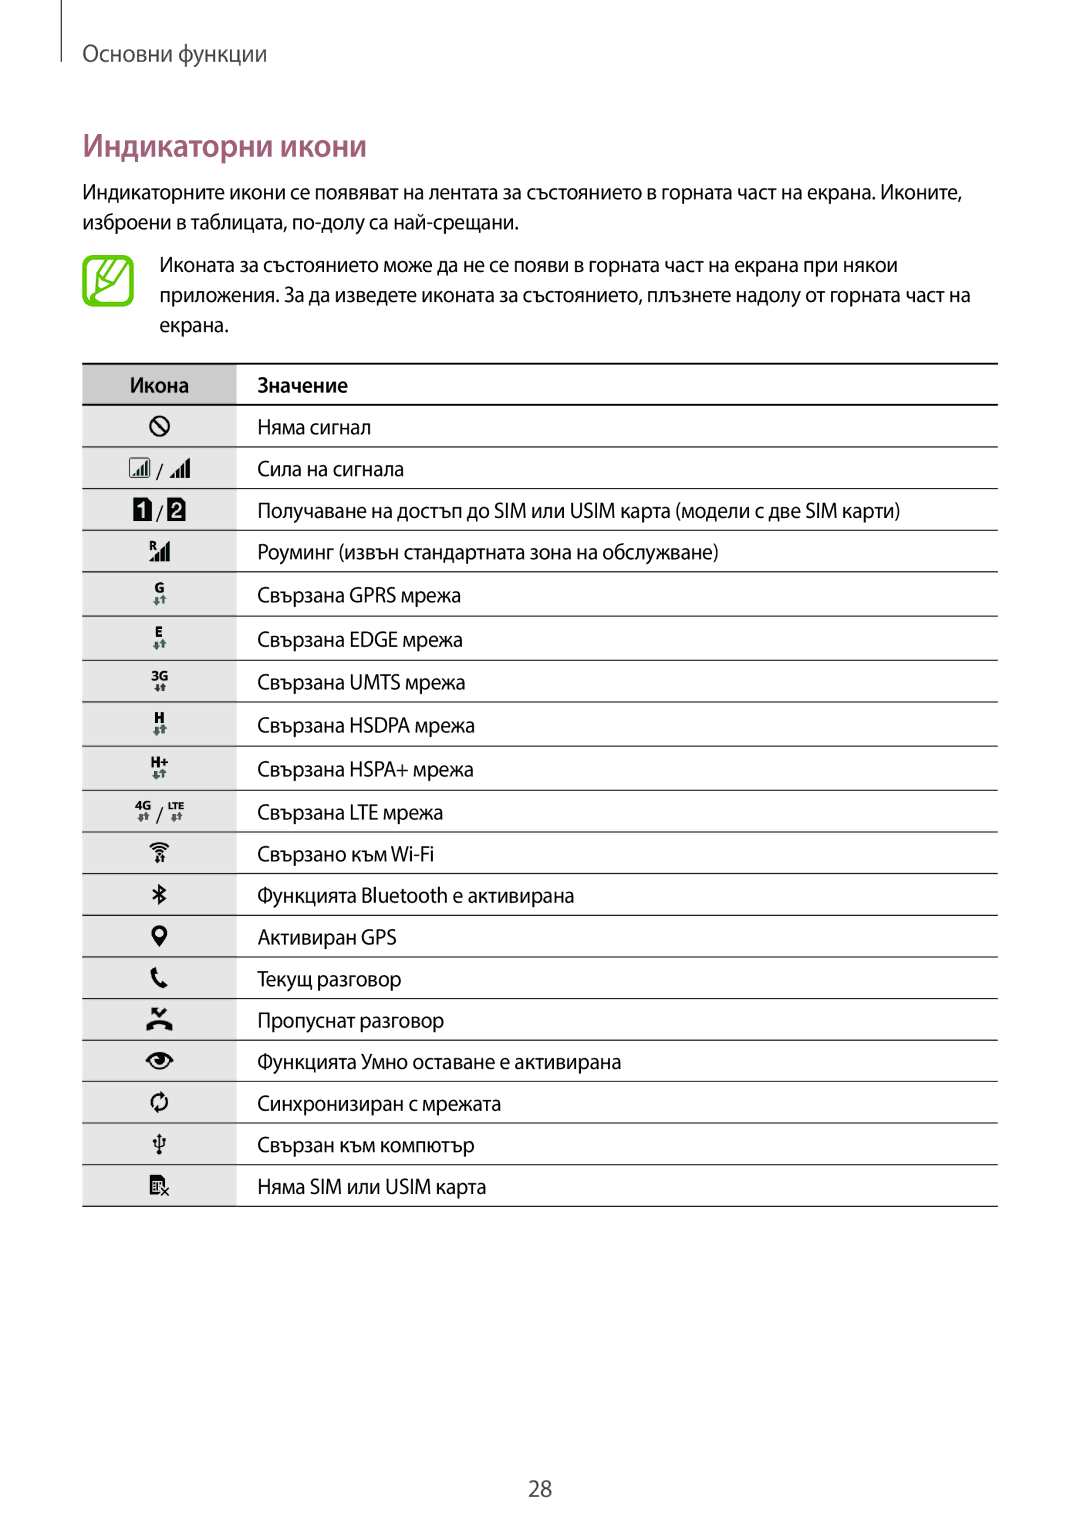 Samsung SM-A500FZDUBGL manual Индикаторни икони, Икона Значение 